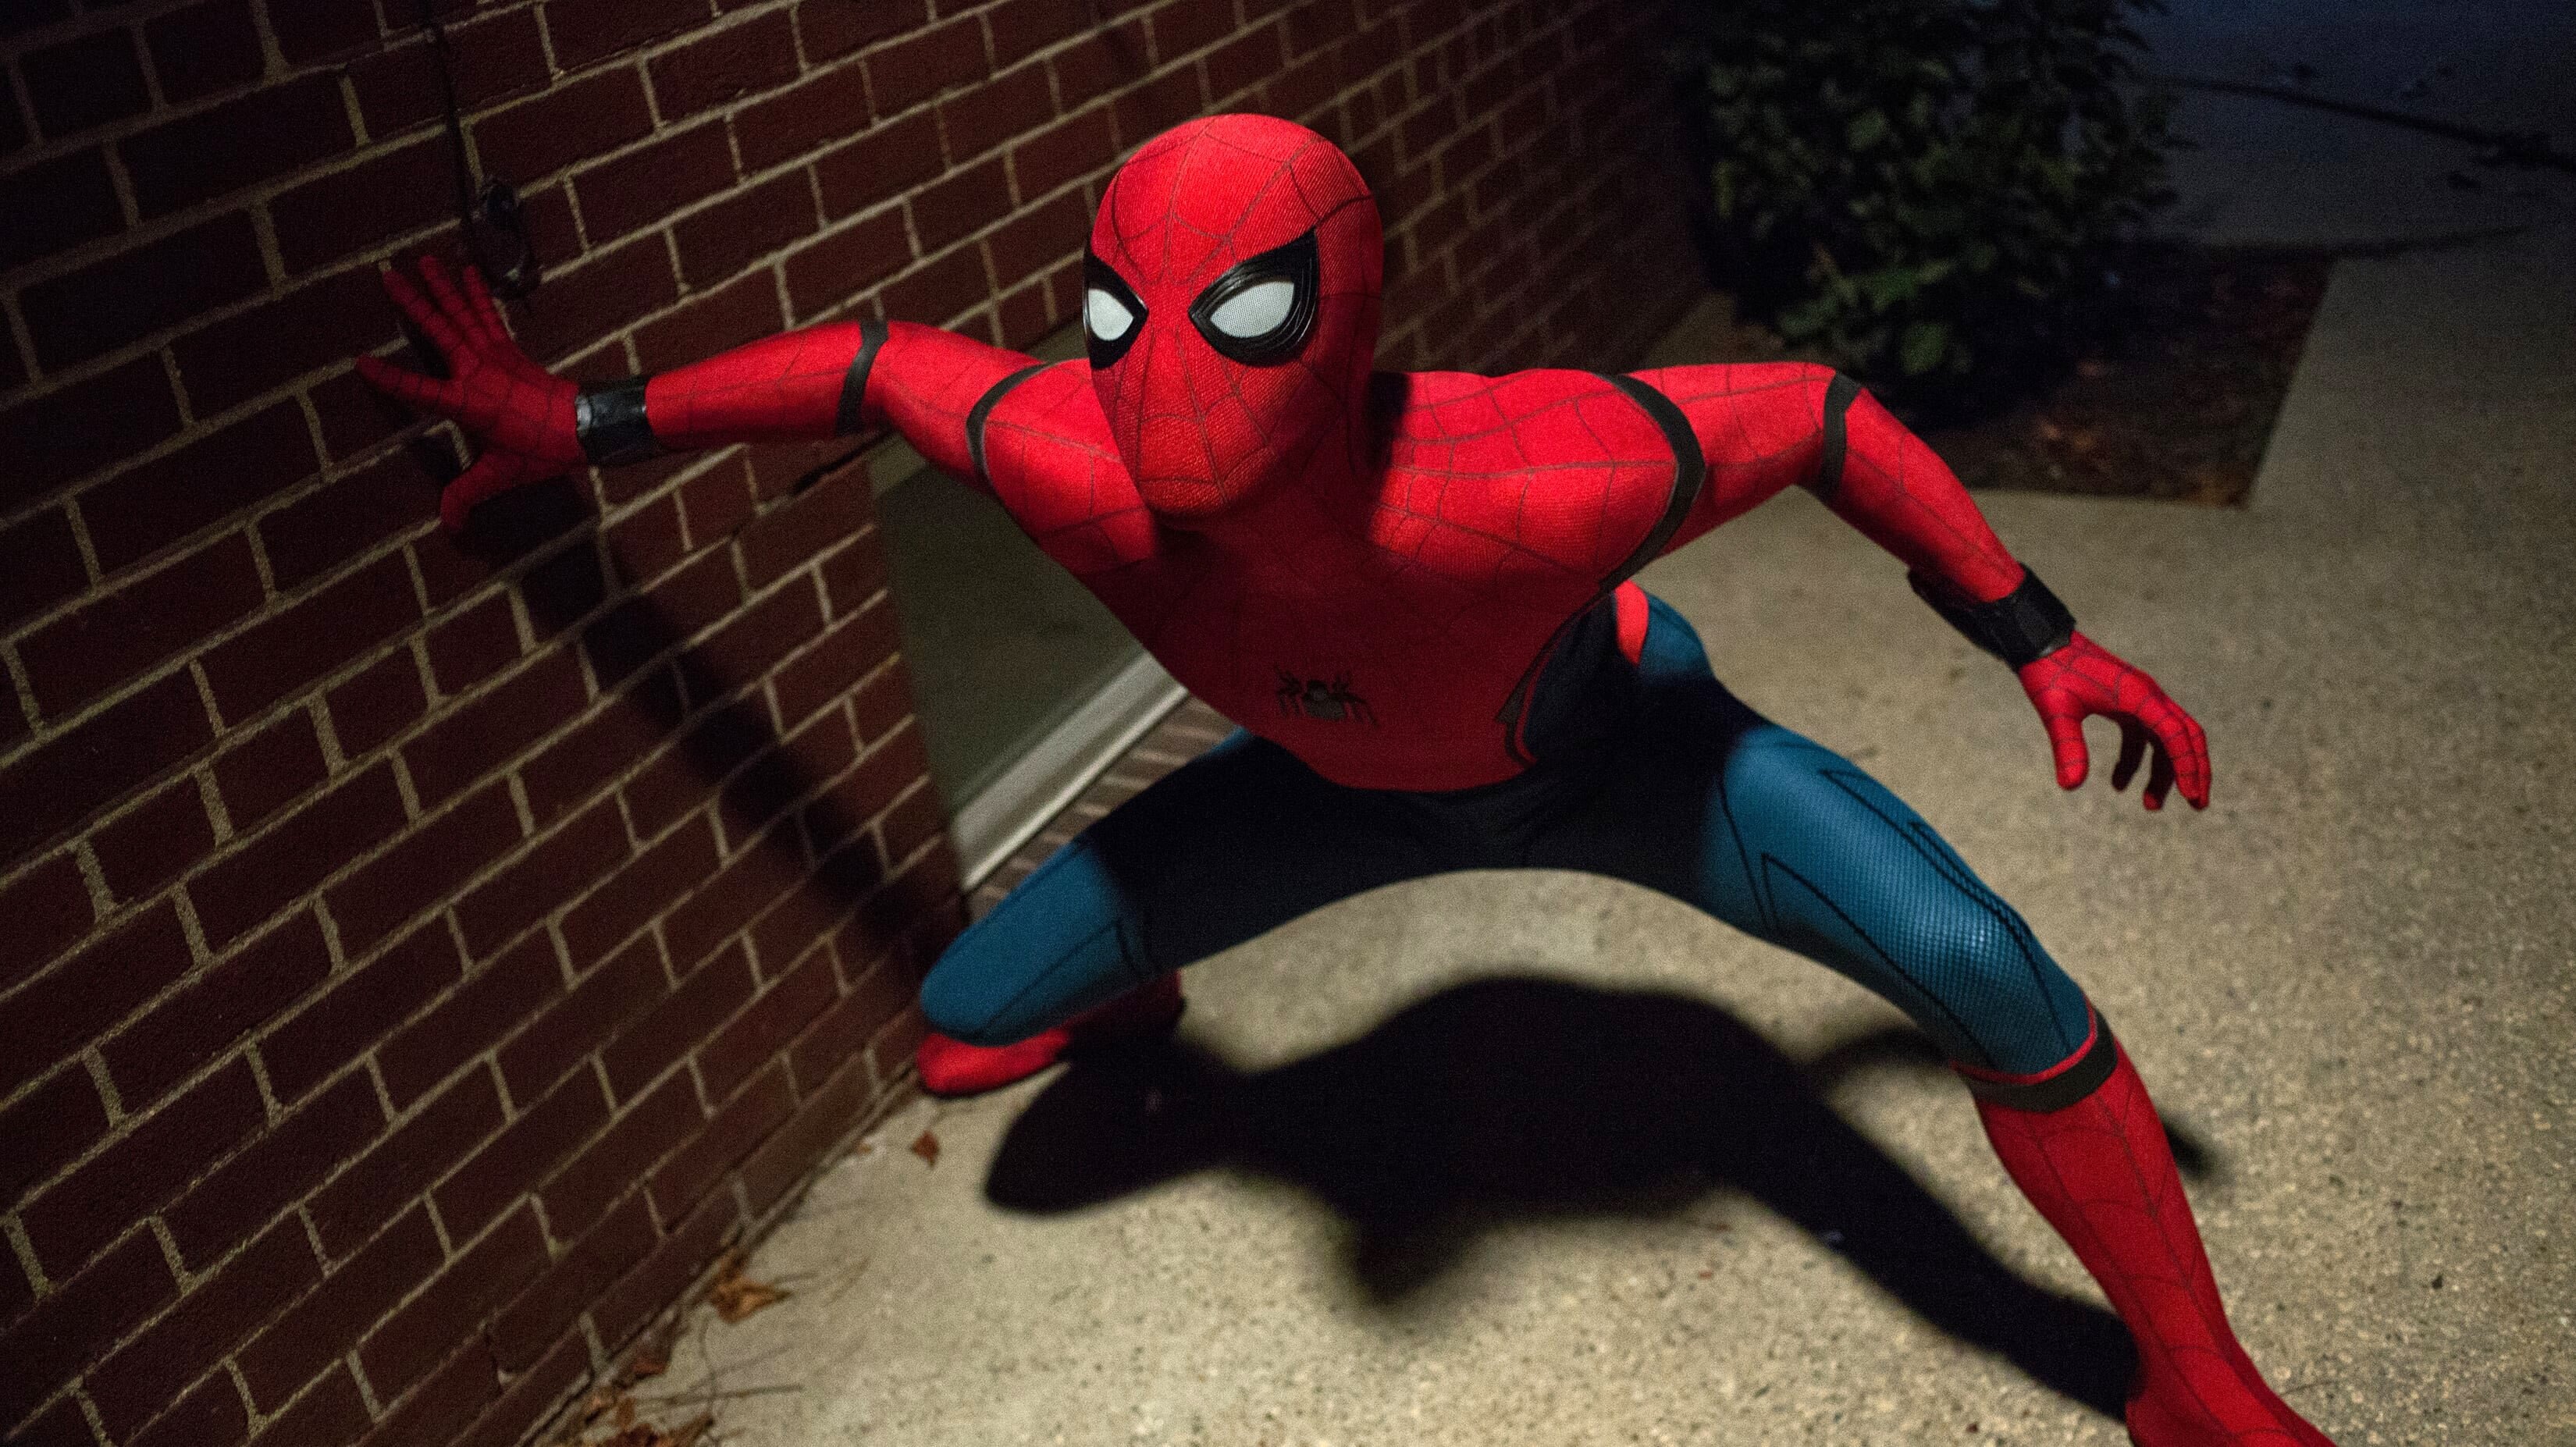 Spider Man: Homecoming